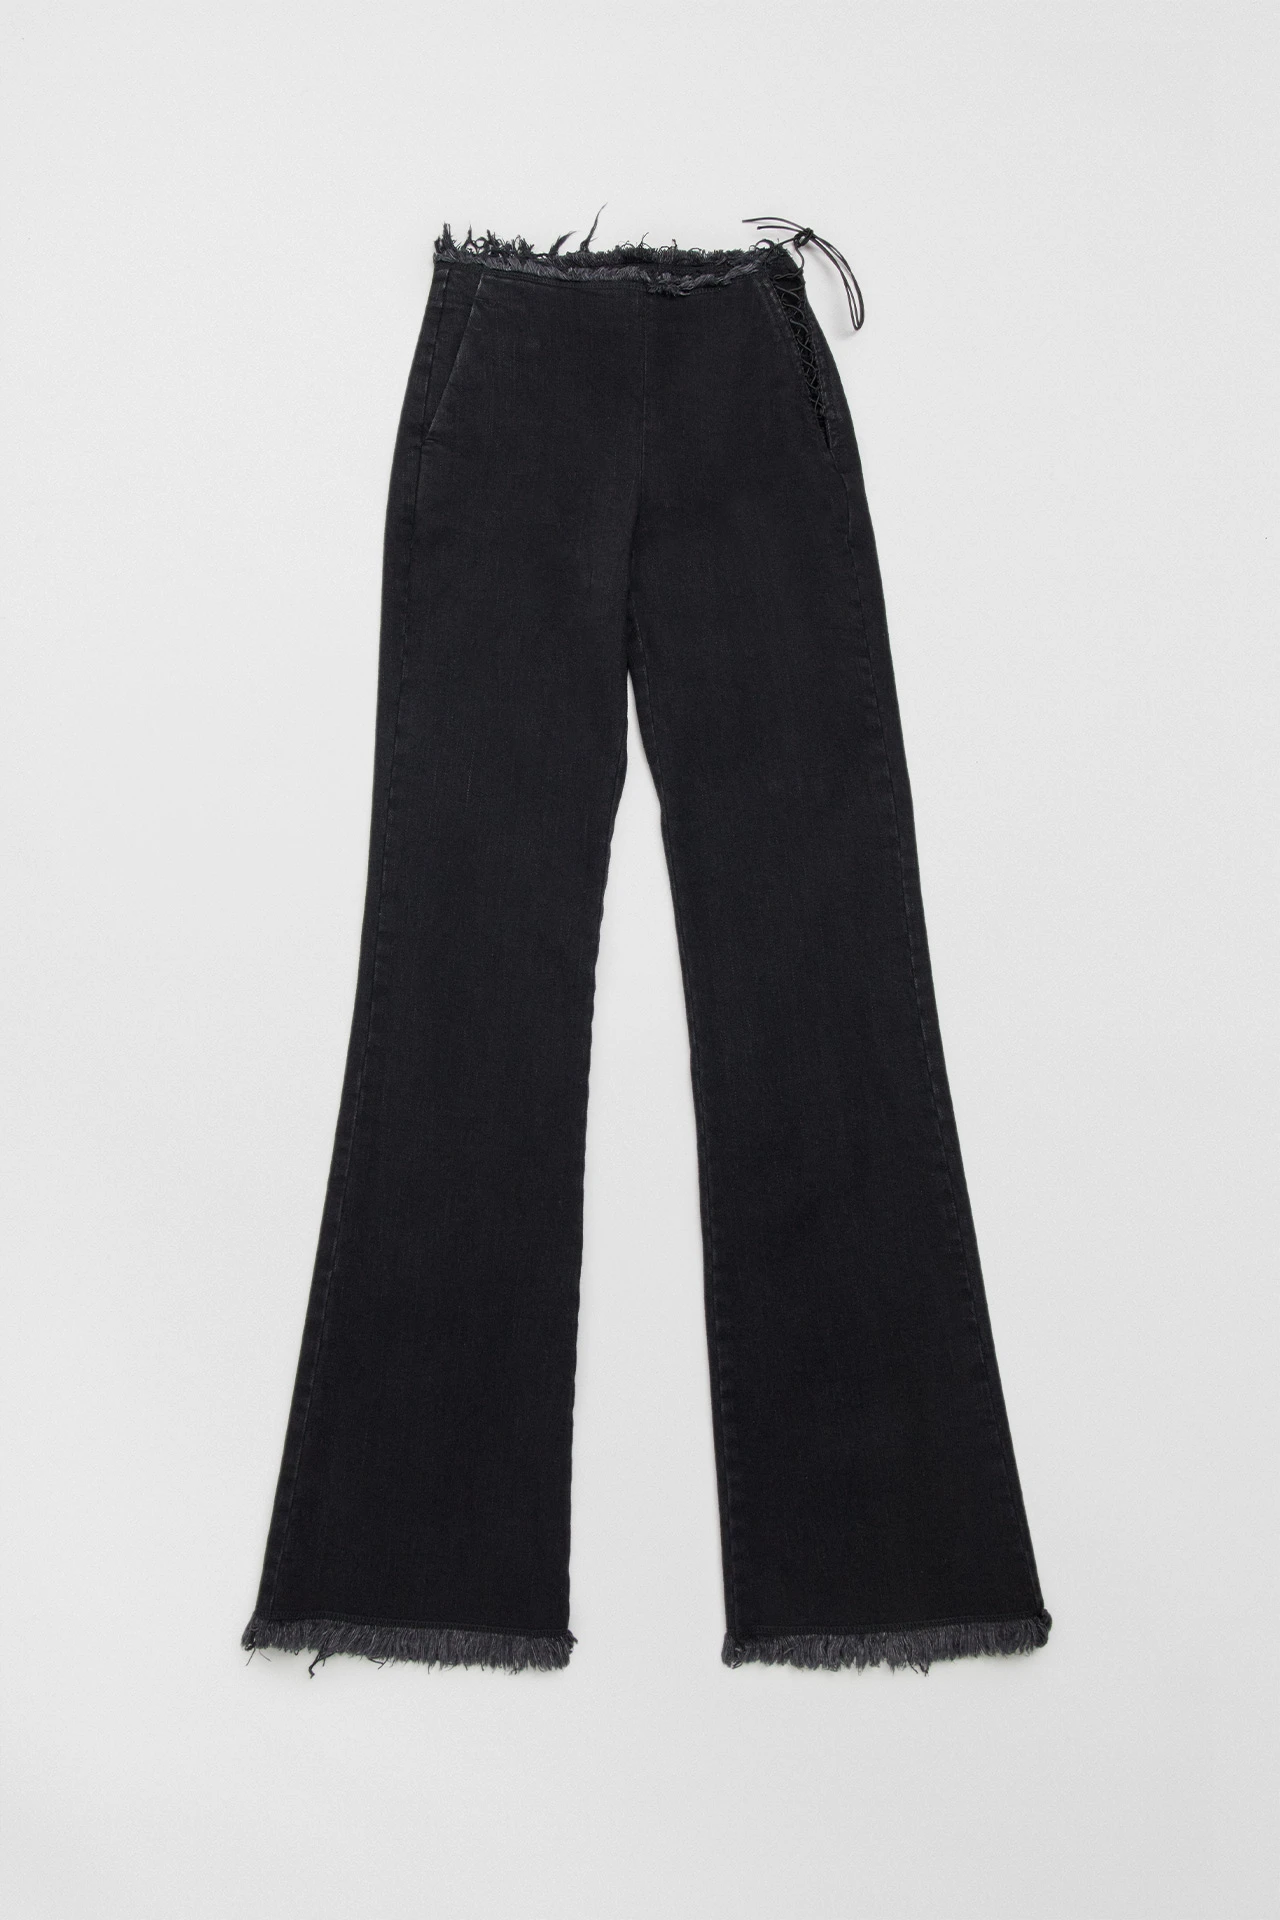 Miista-priya-black-denim-trousers-01